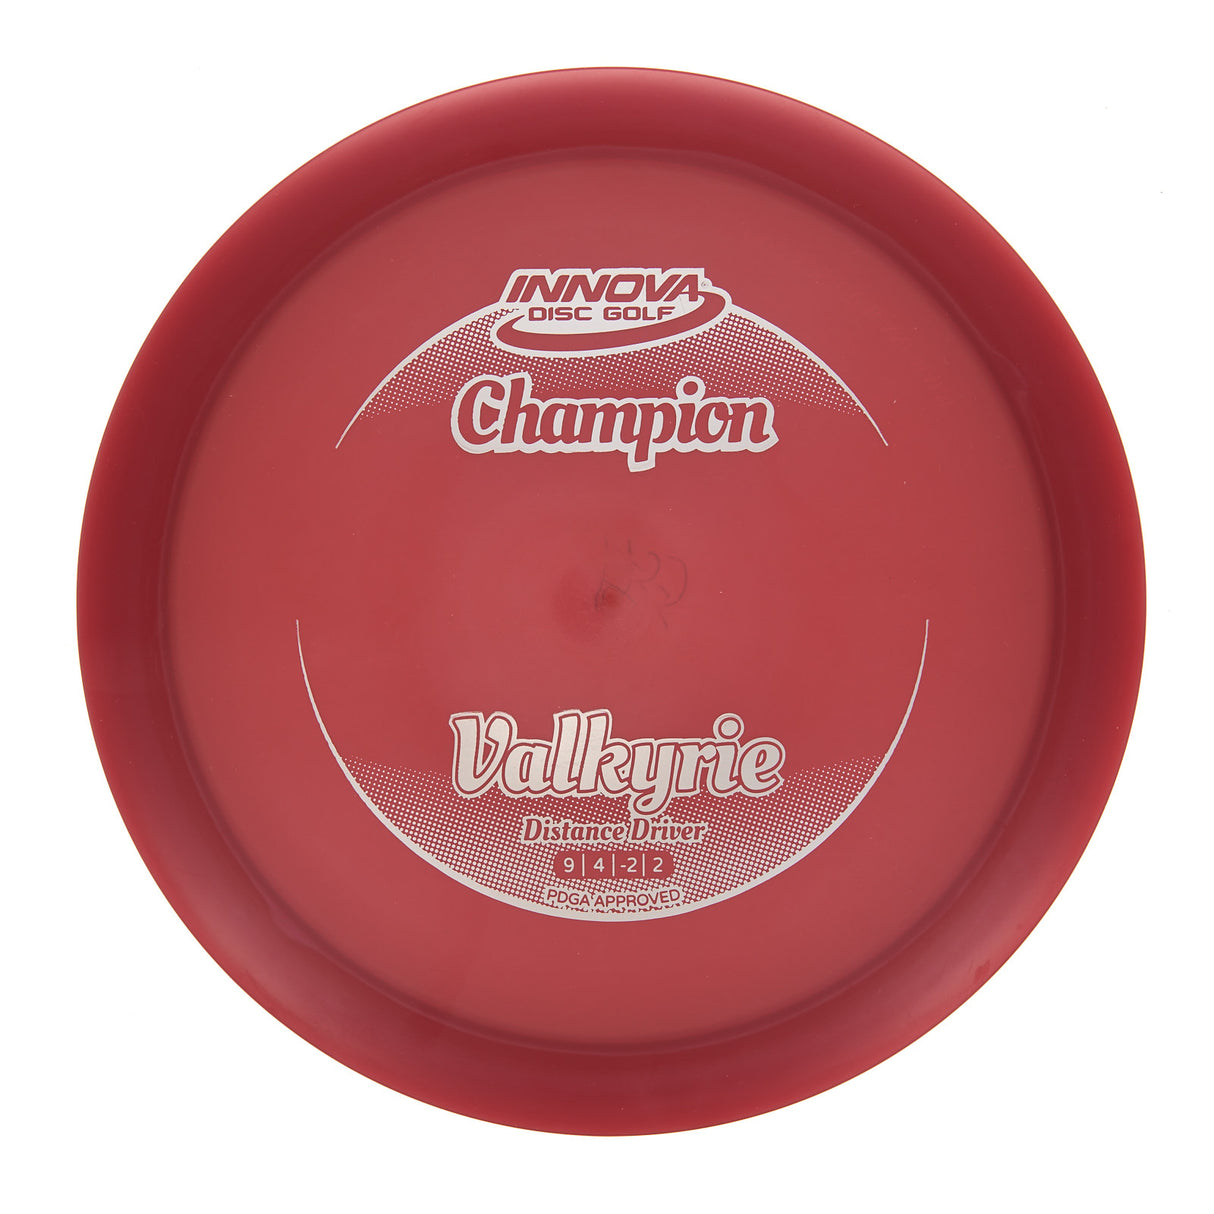 Innova Valkyrie - Champion 176g | Style 0001